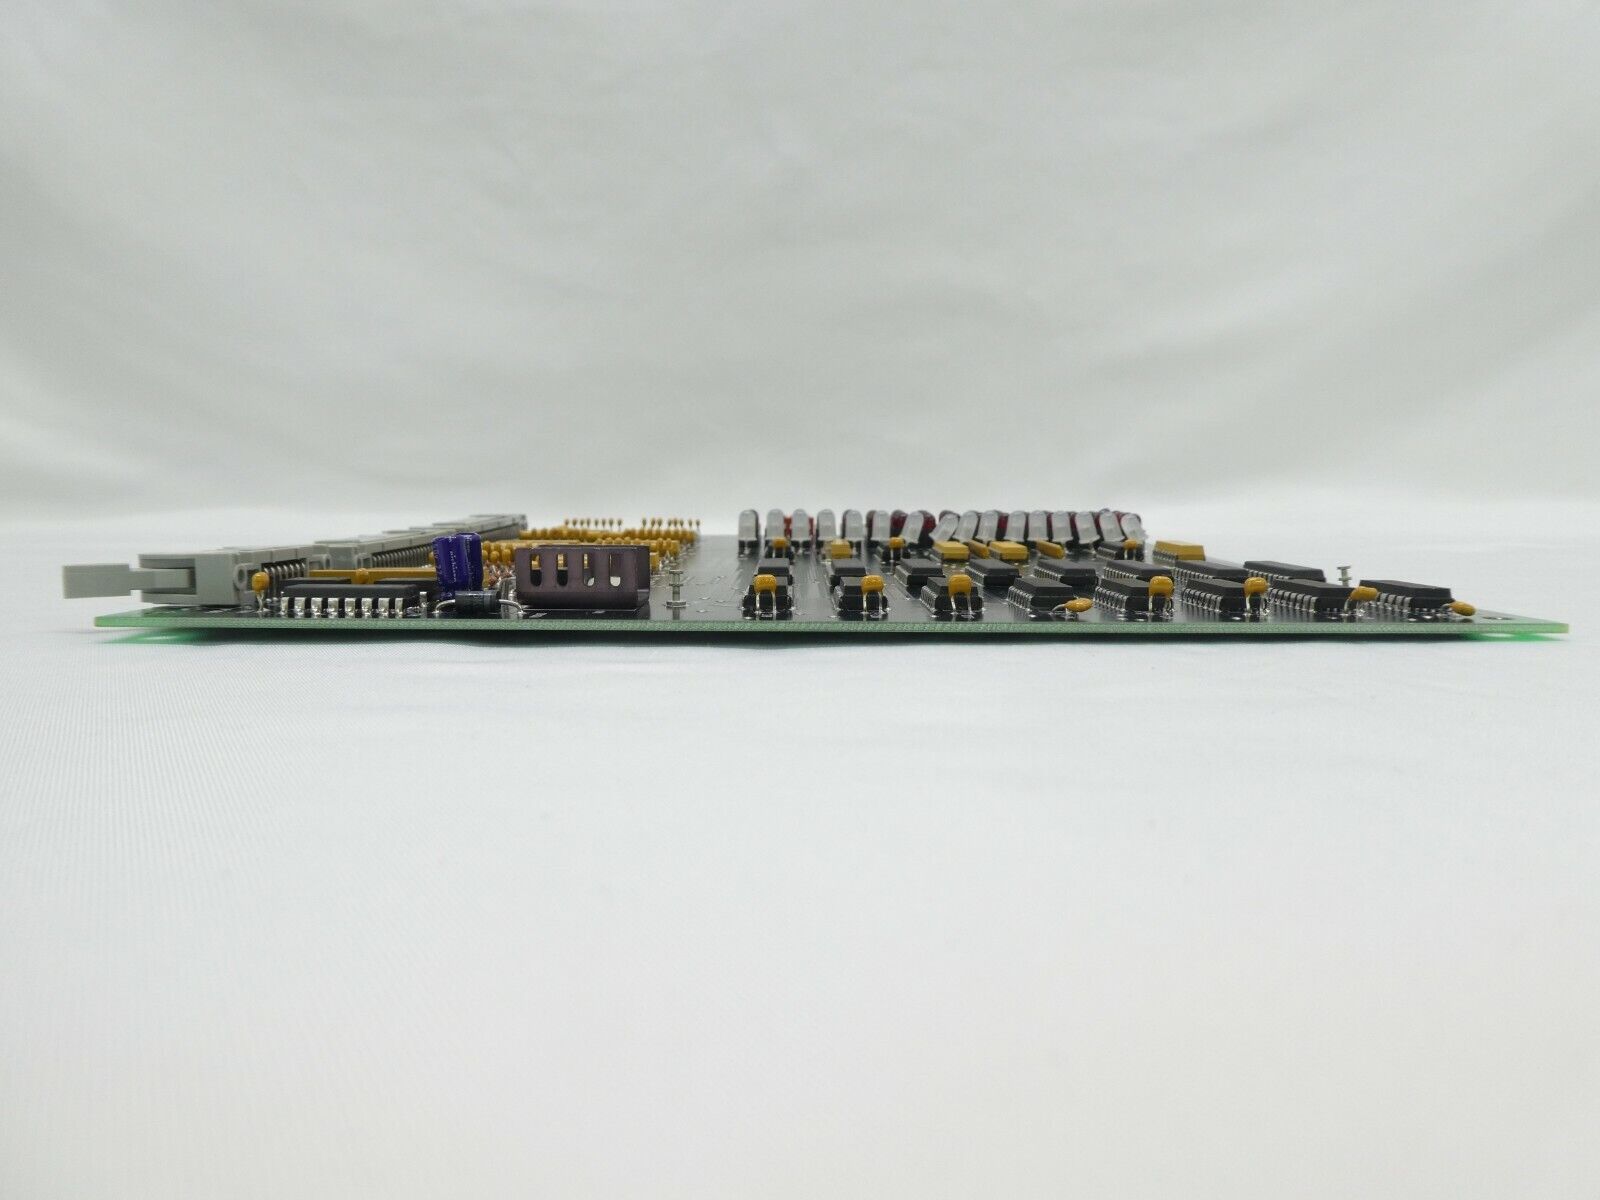 SVG Silicon Valley Group 99-80270-01 Sensor Multiplexor Board PCB Rev. B Working